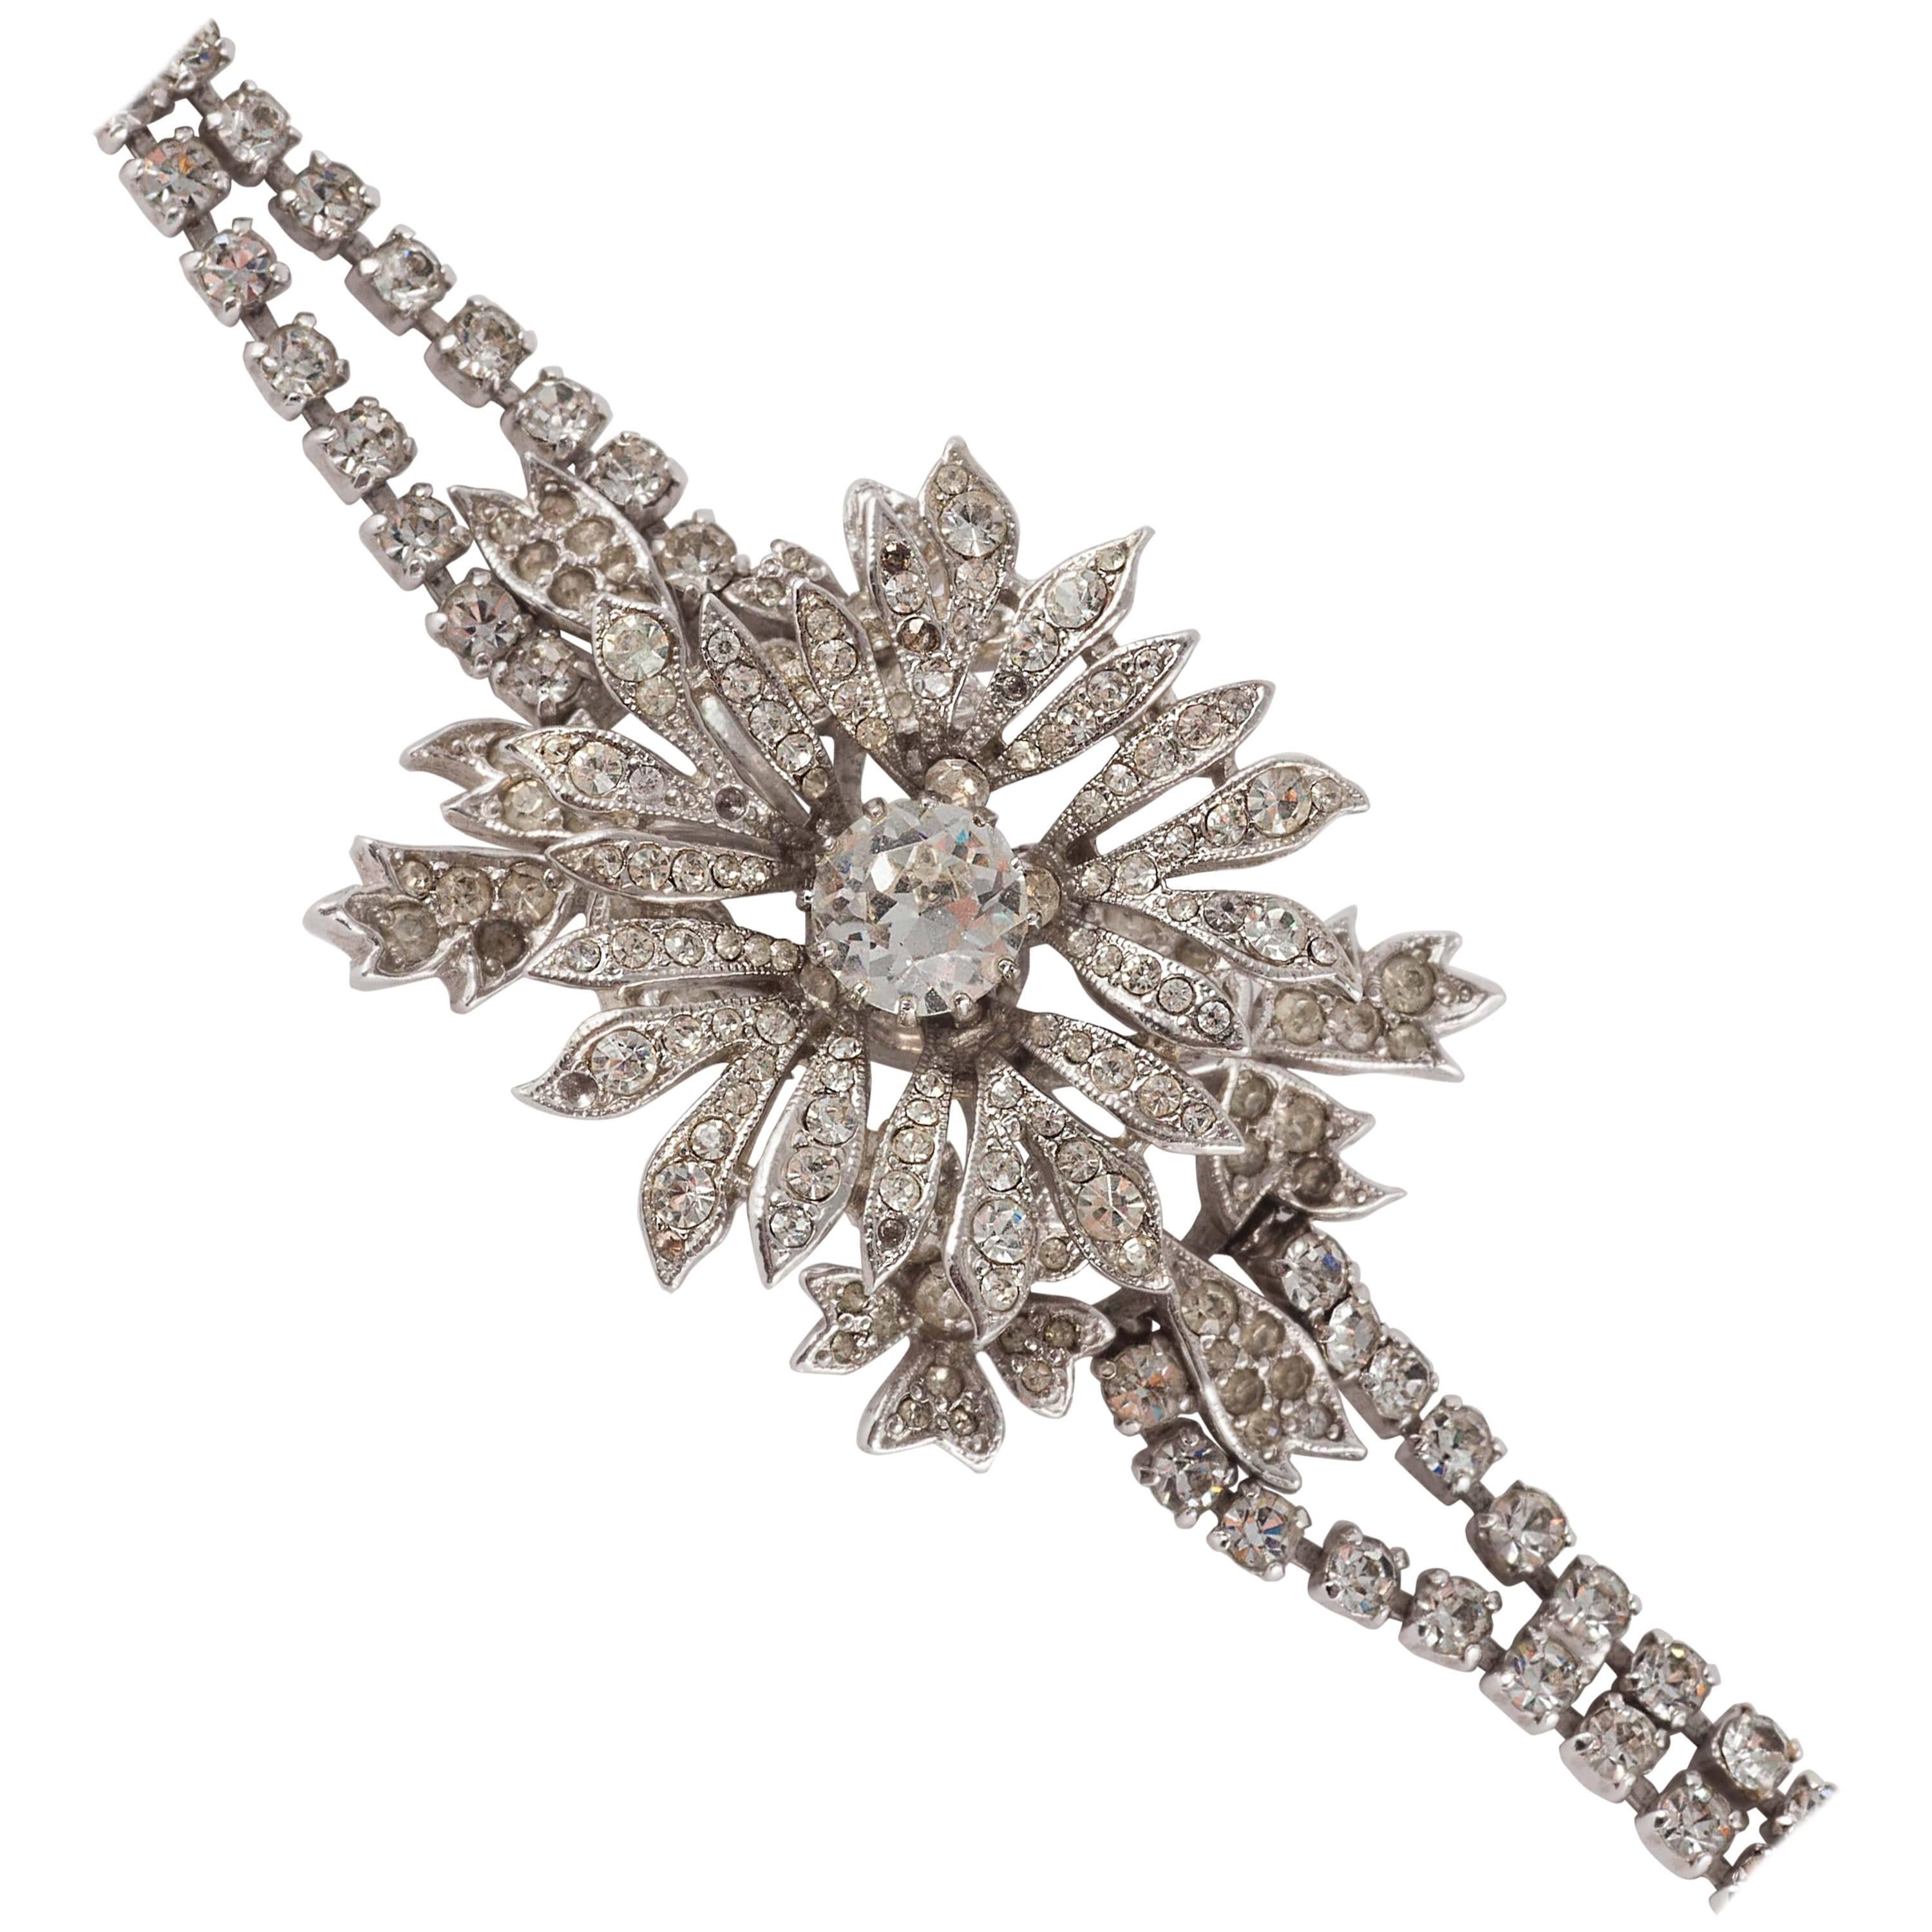 Rare paste 'en tremblant' flower bracelet by Christian Dior